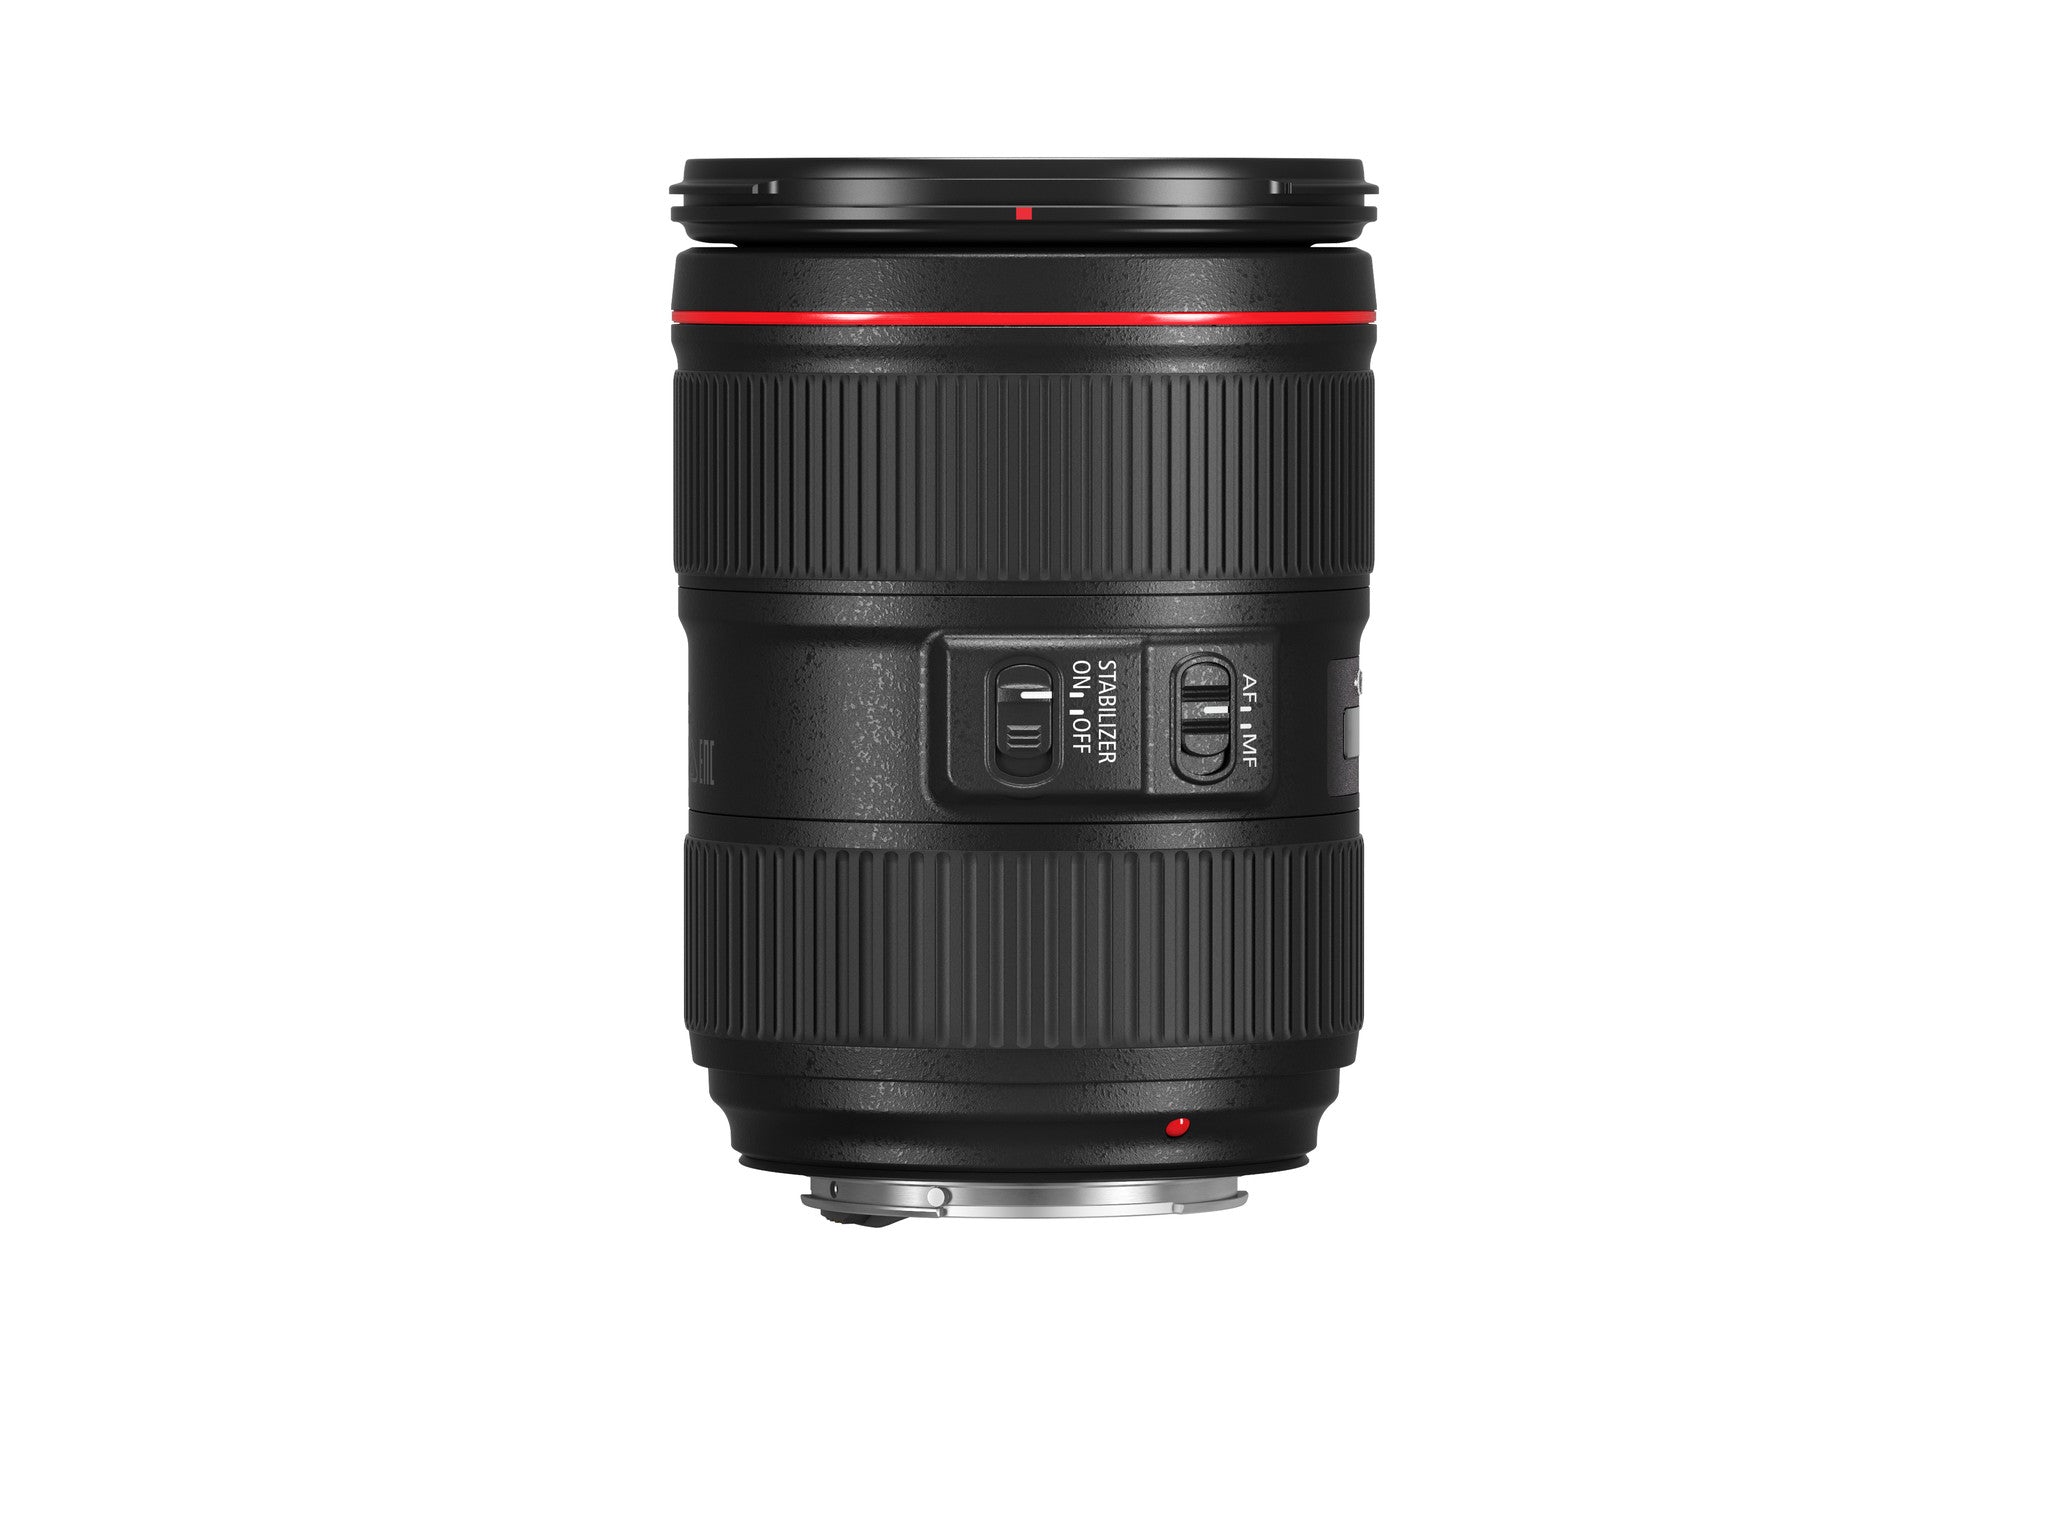 Canon EF 24-105mm f/4L IS II USM Lens, lenses slr lenses, Canon - Pictureline  - 4